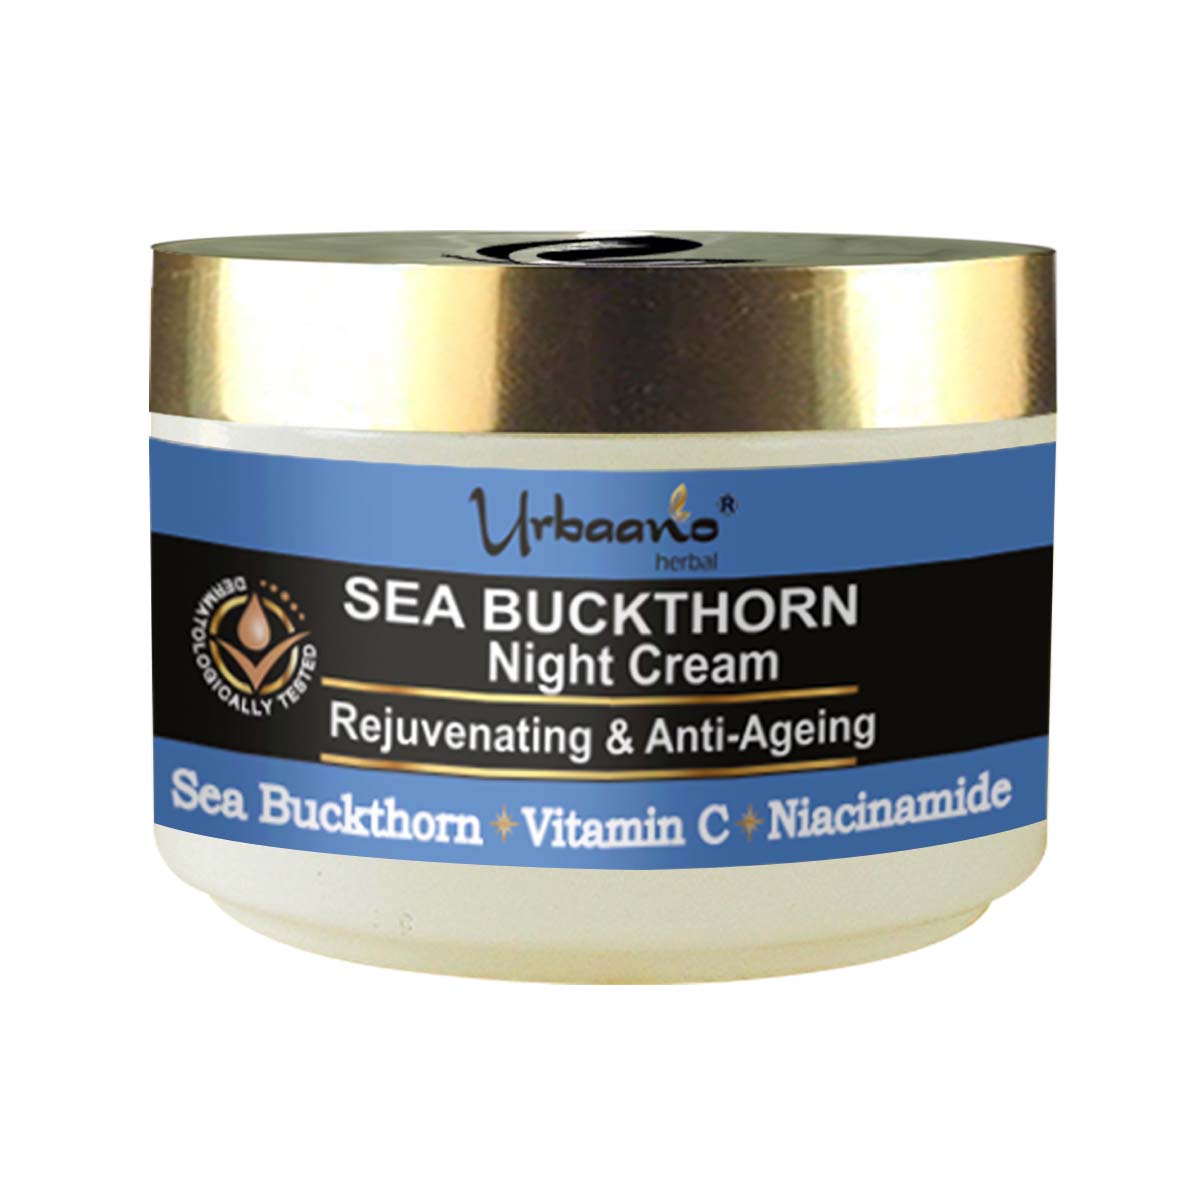 Sea Buckthorn Night Cream for Glow, Lighten, Youthful Firm Skin